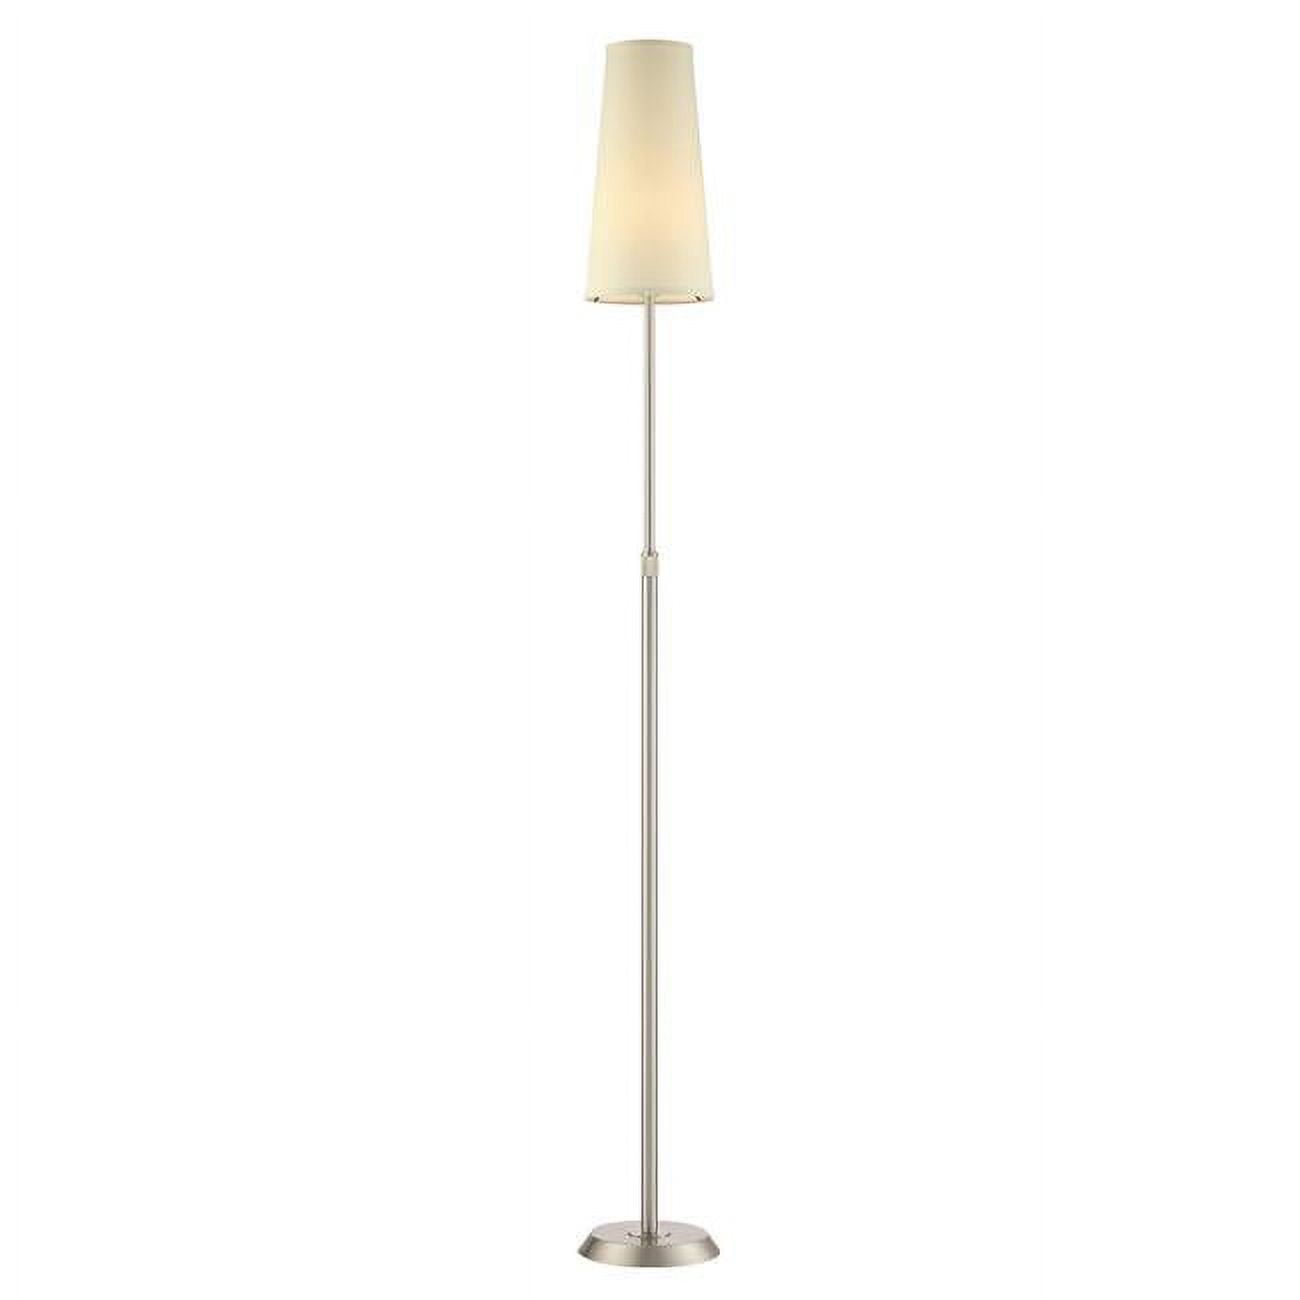 Picture of Arnsberg 409400107 Attendorn Floor Lamp, Satin Nickel